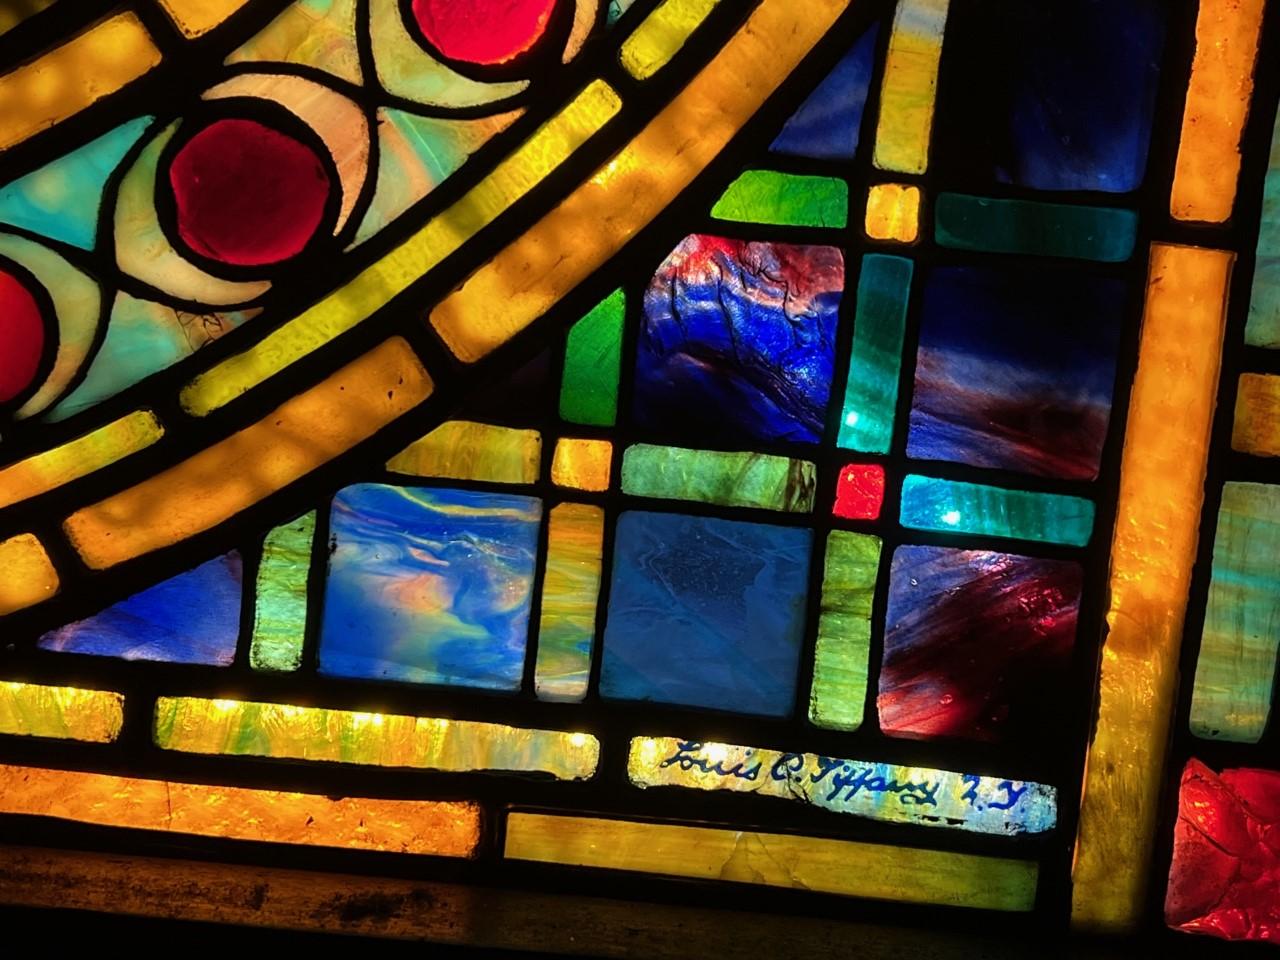 American Classical Louis C. Tiffany Studios Medallion Landscape Museum Art Glass Window